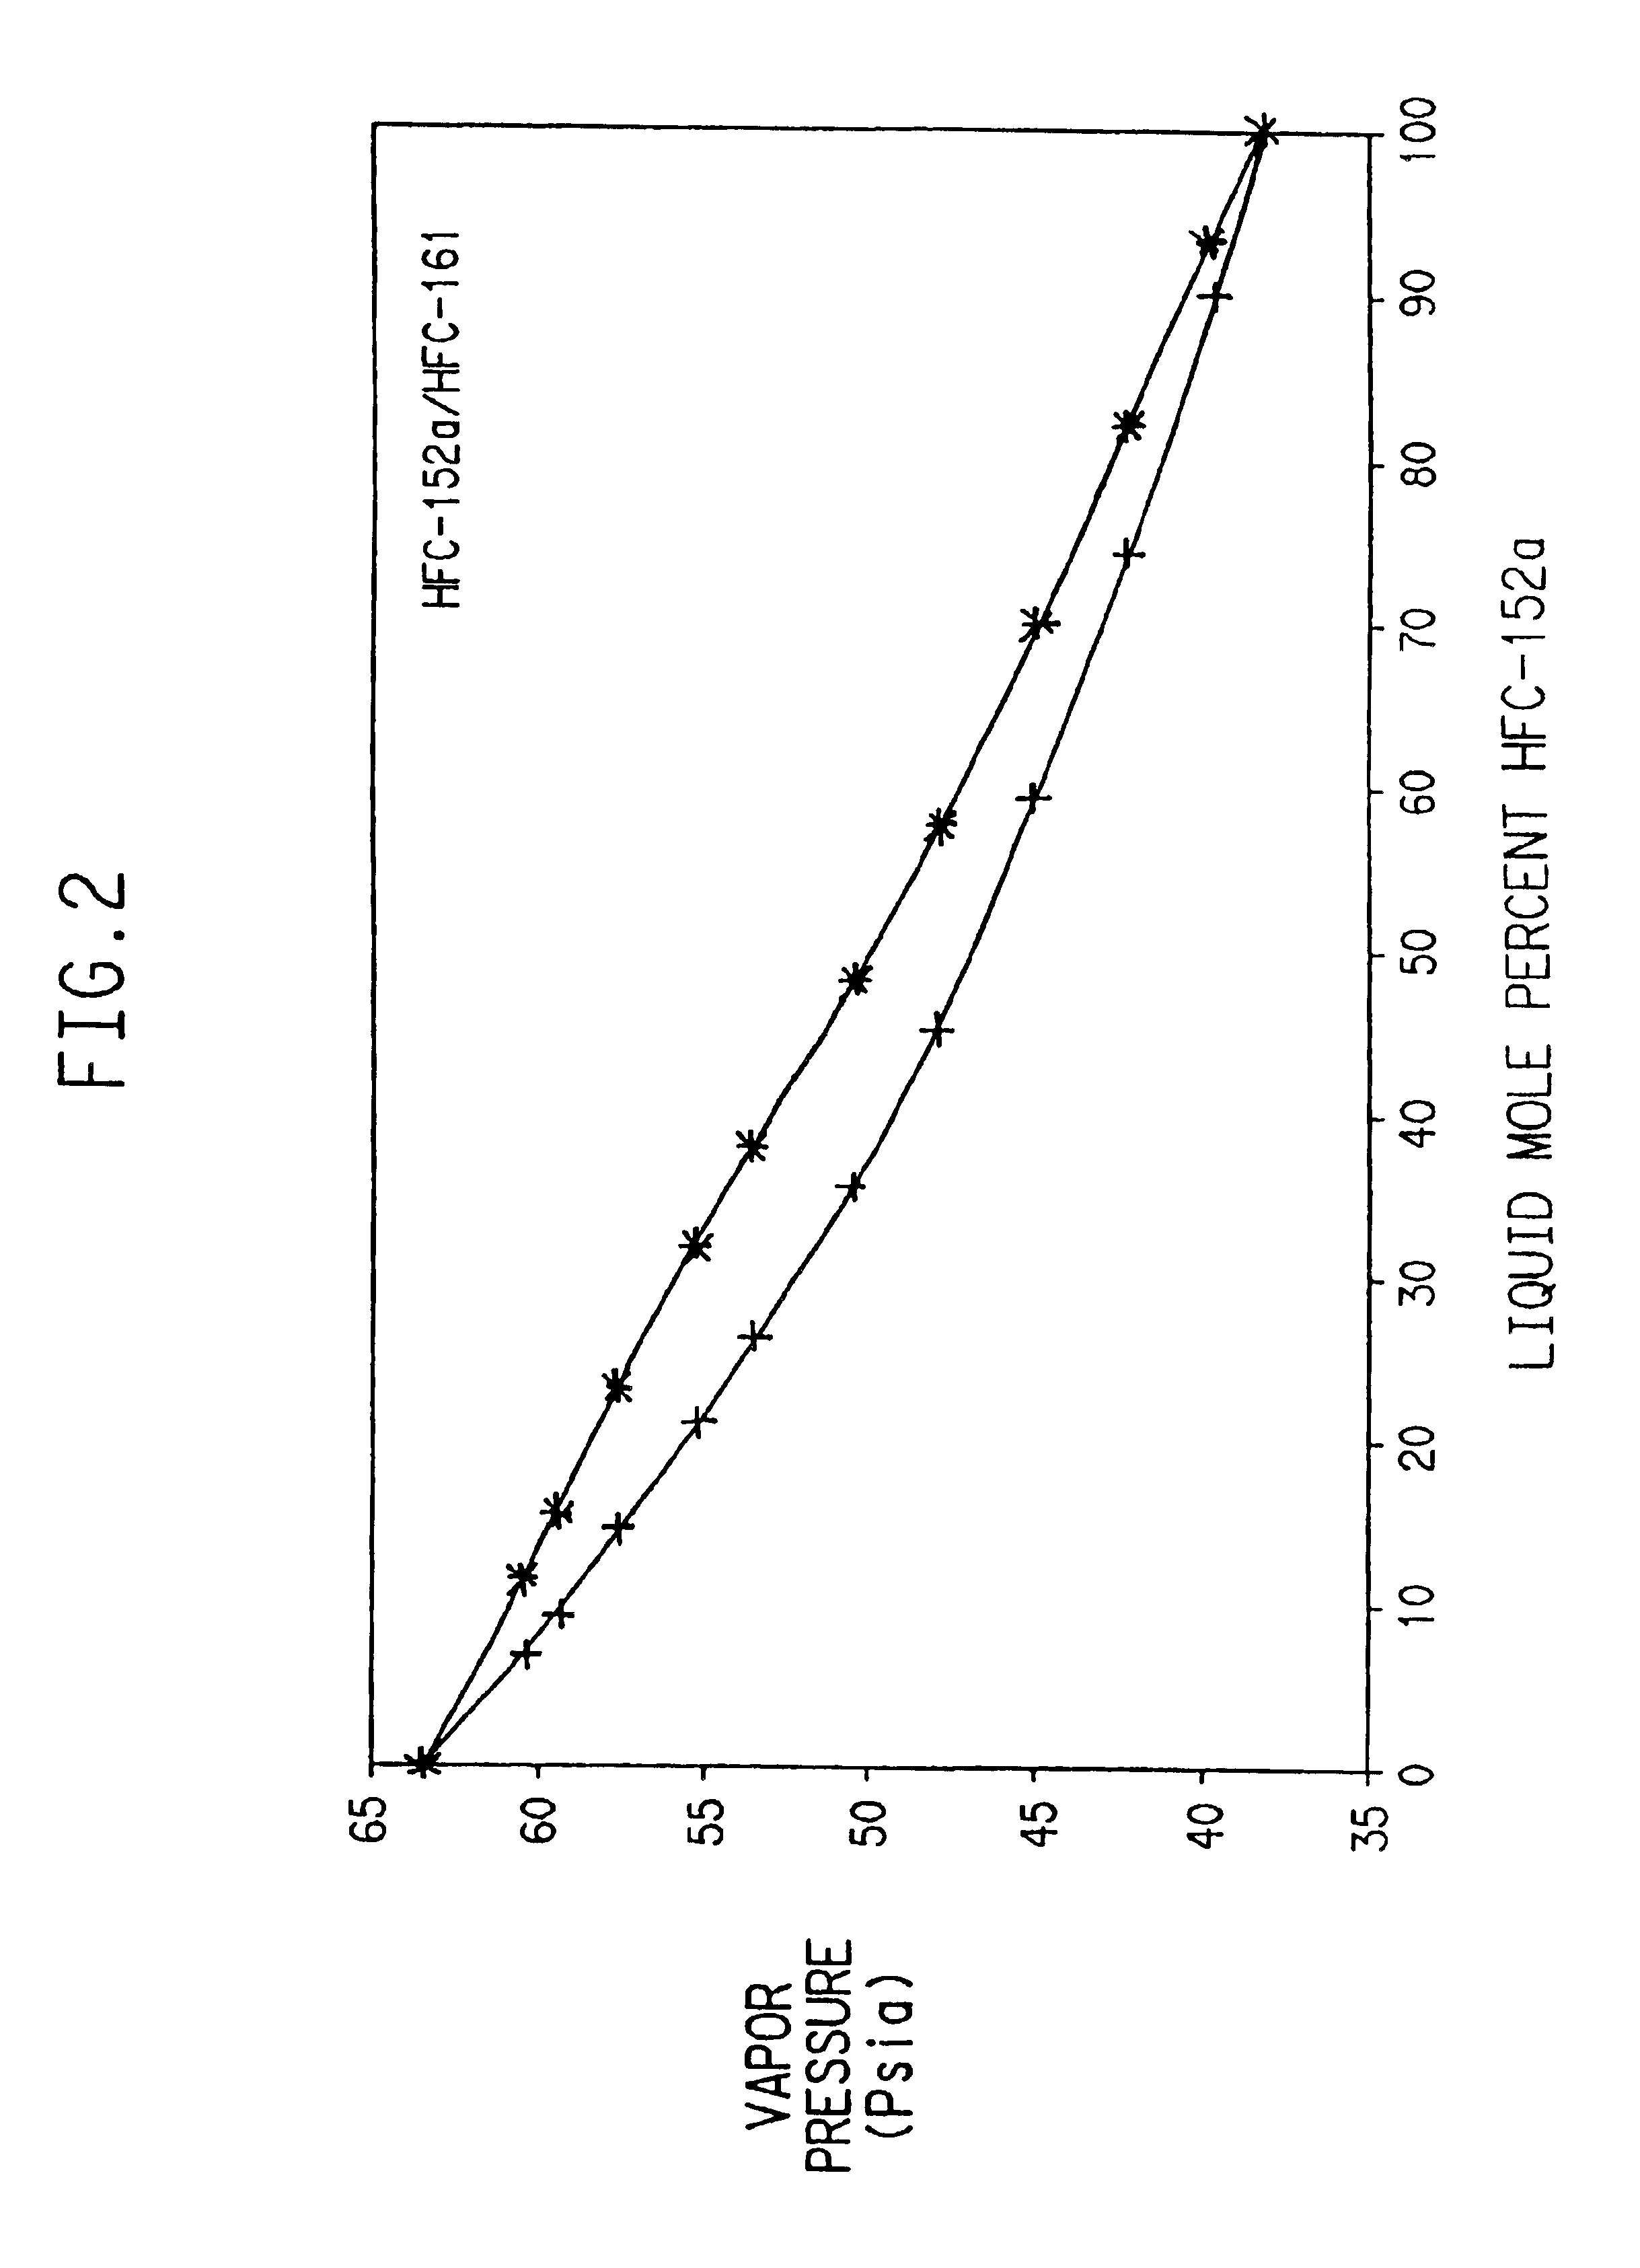 Azeotrope-like compositions containing fluoroethane